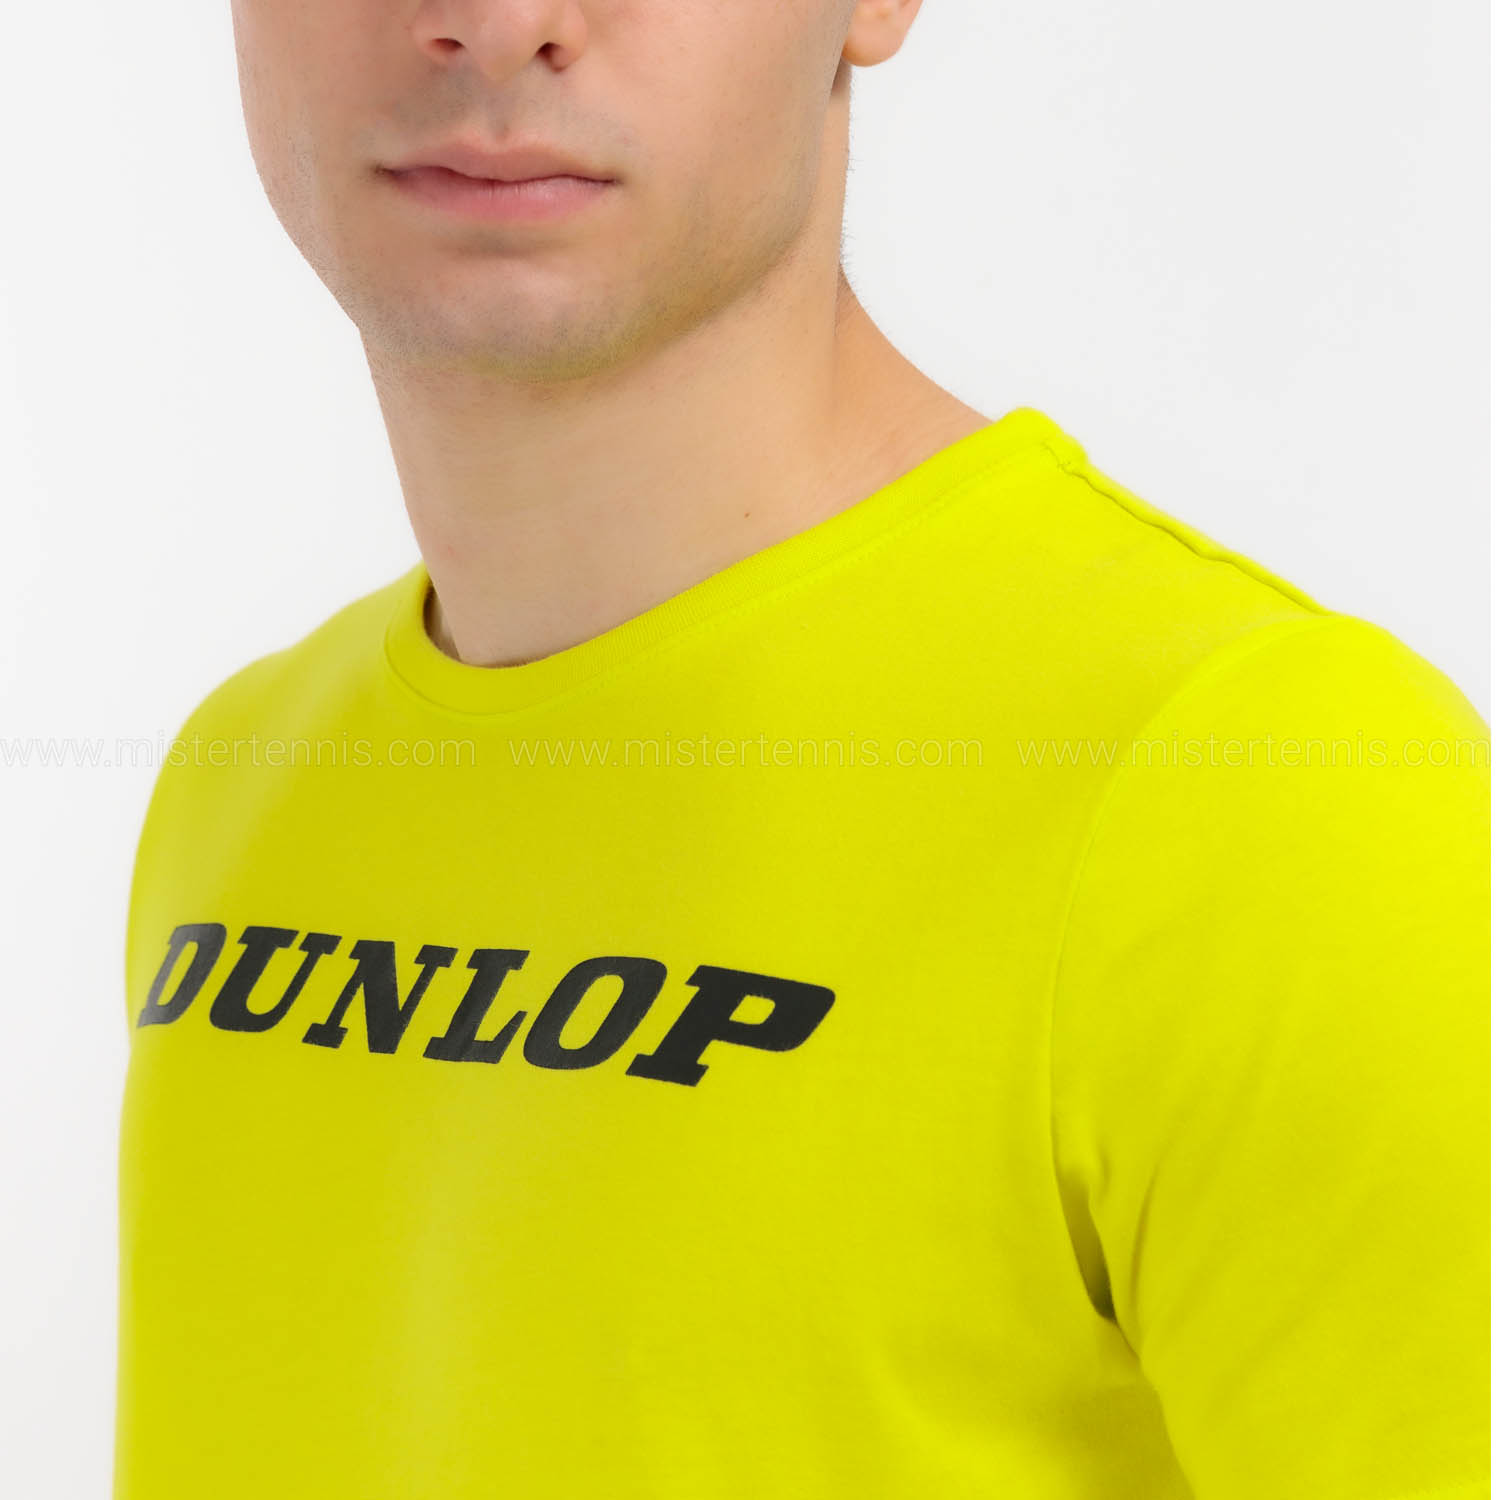 Dunlop Essentials Camiseta - Bright Yellow